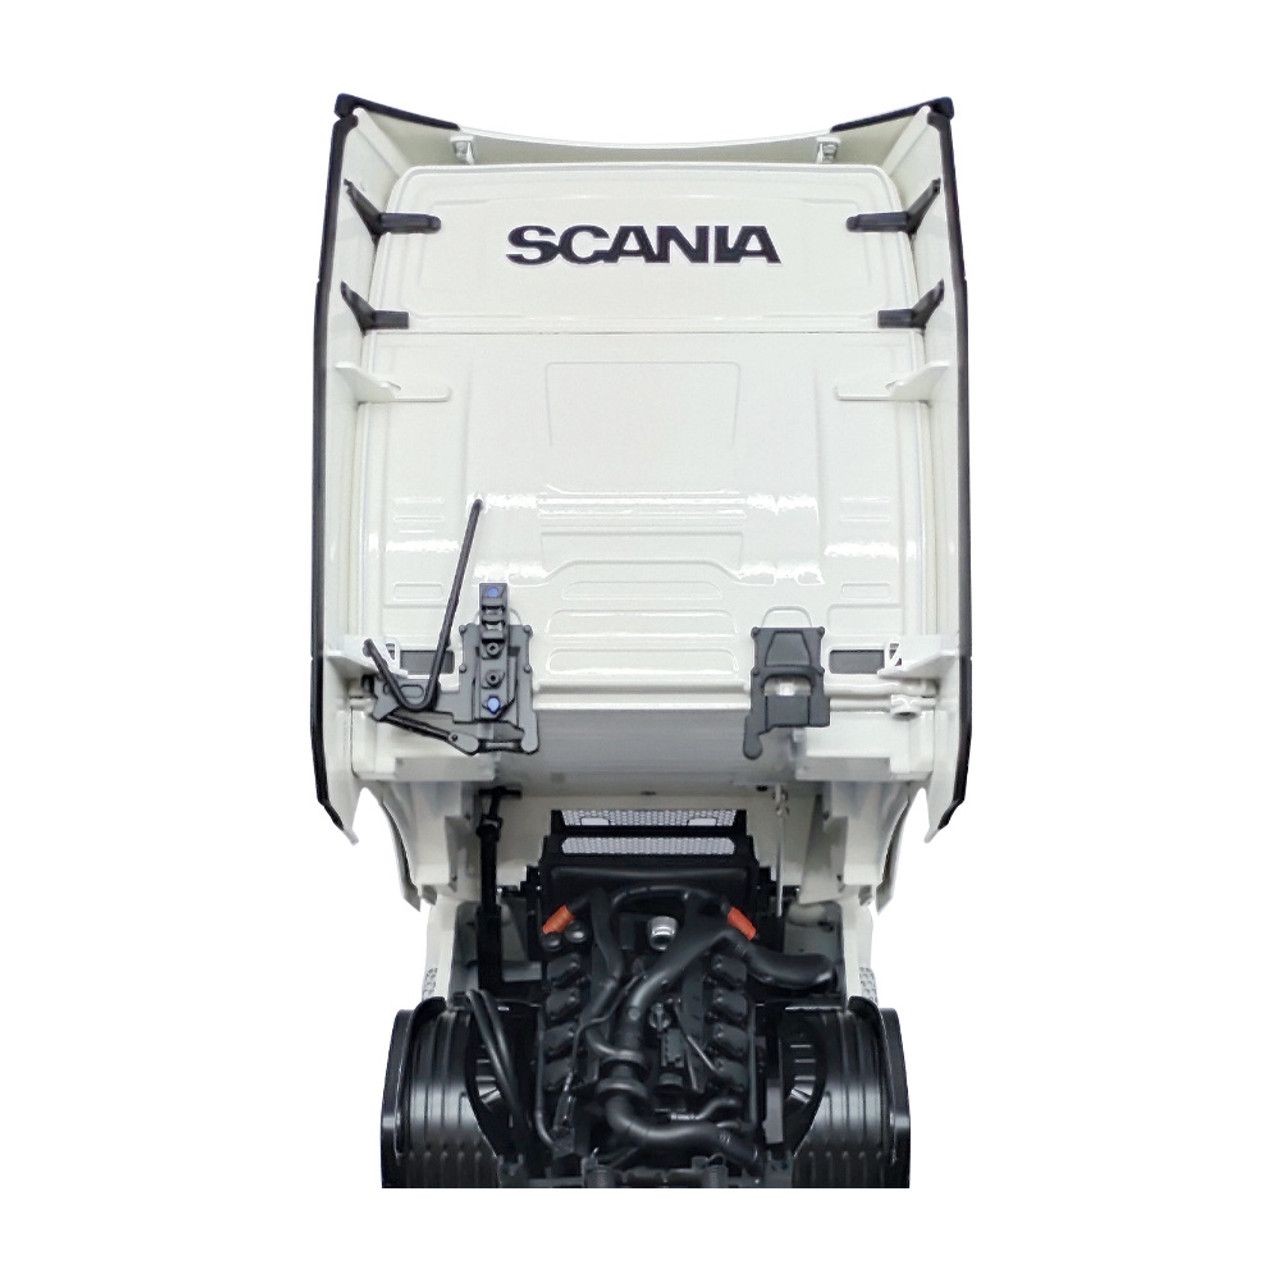 1/18 NZG Scania V8 730S 4x2 (White) Diecast Car Model